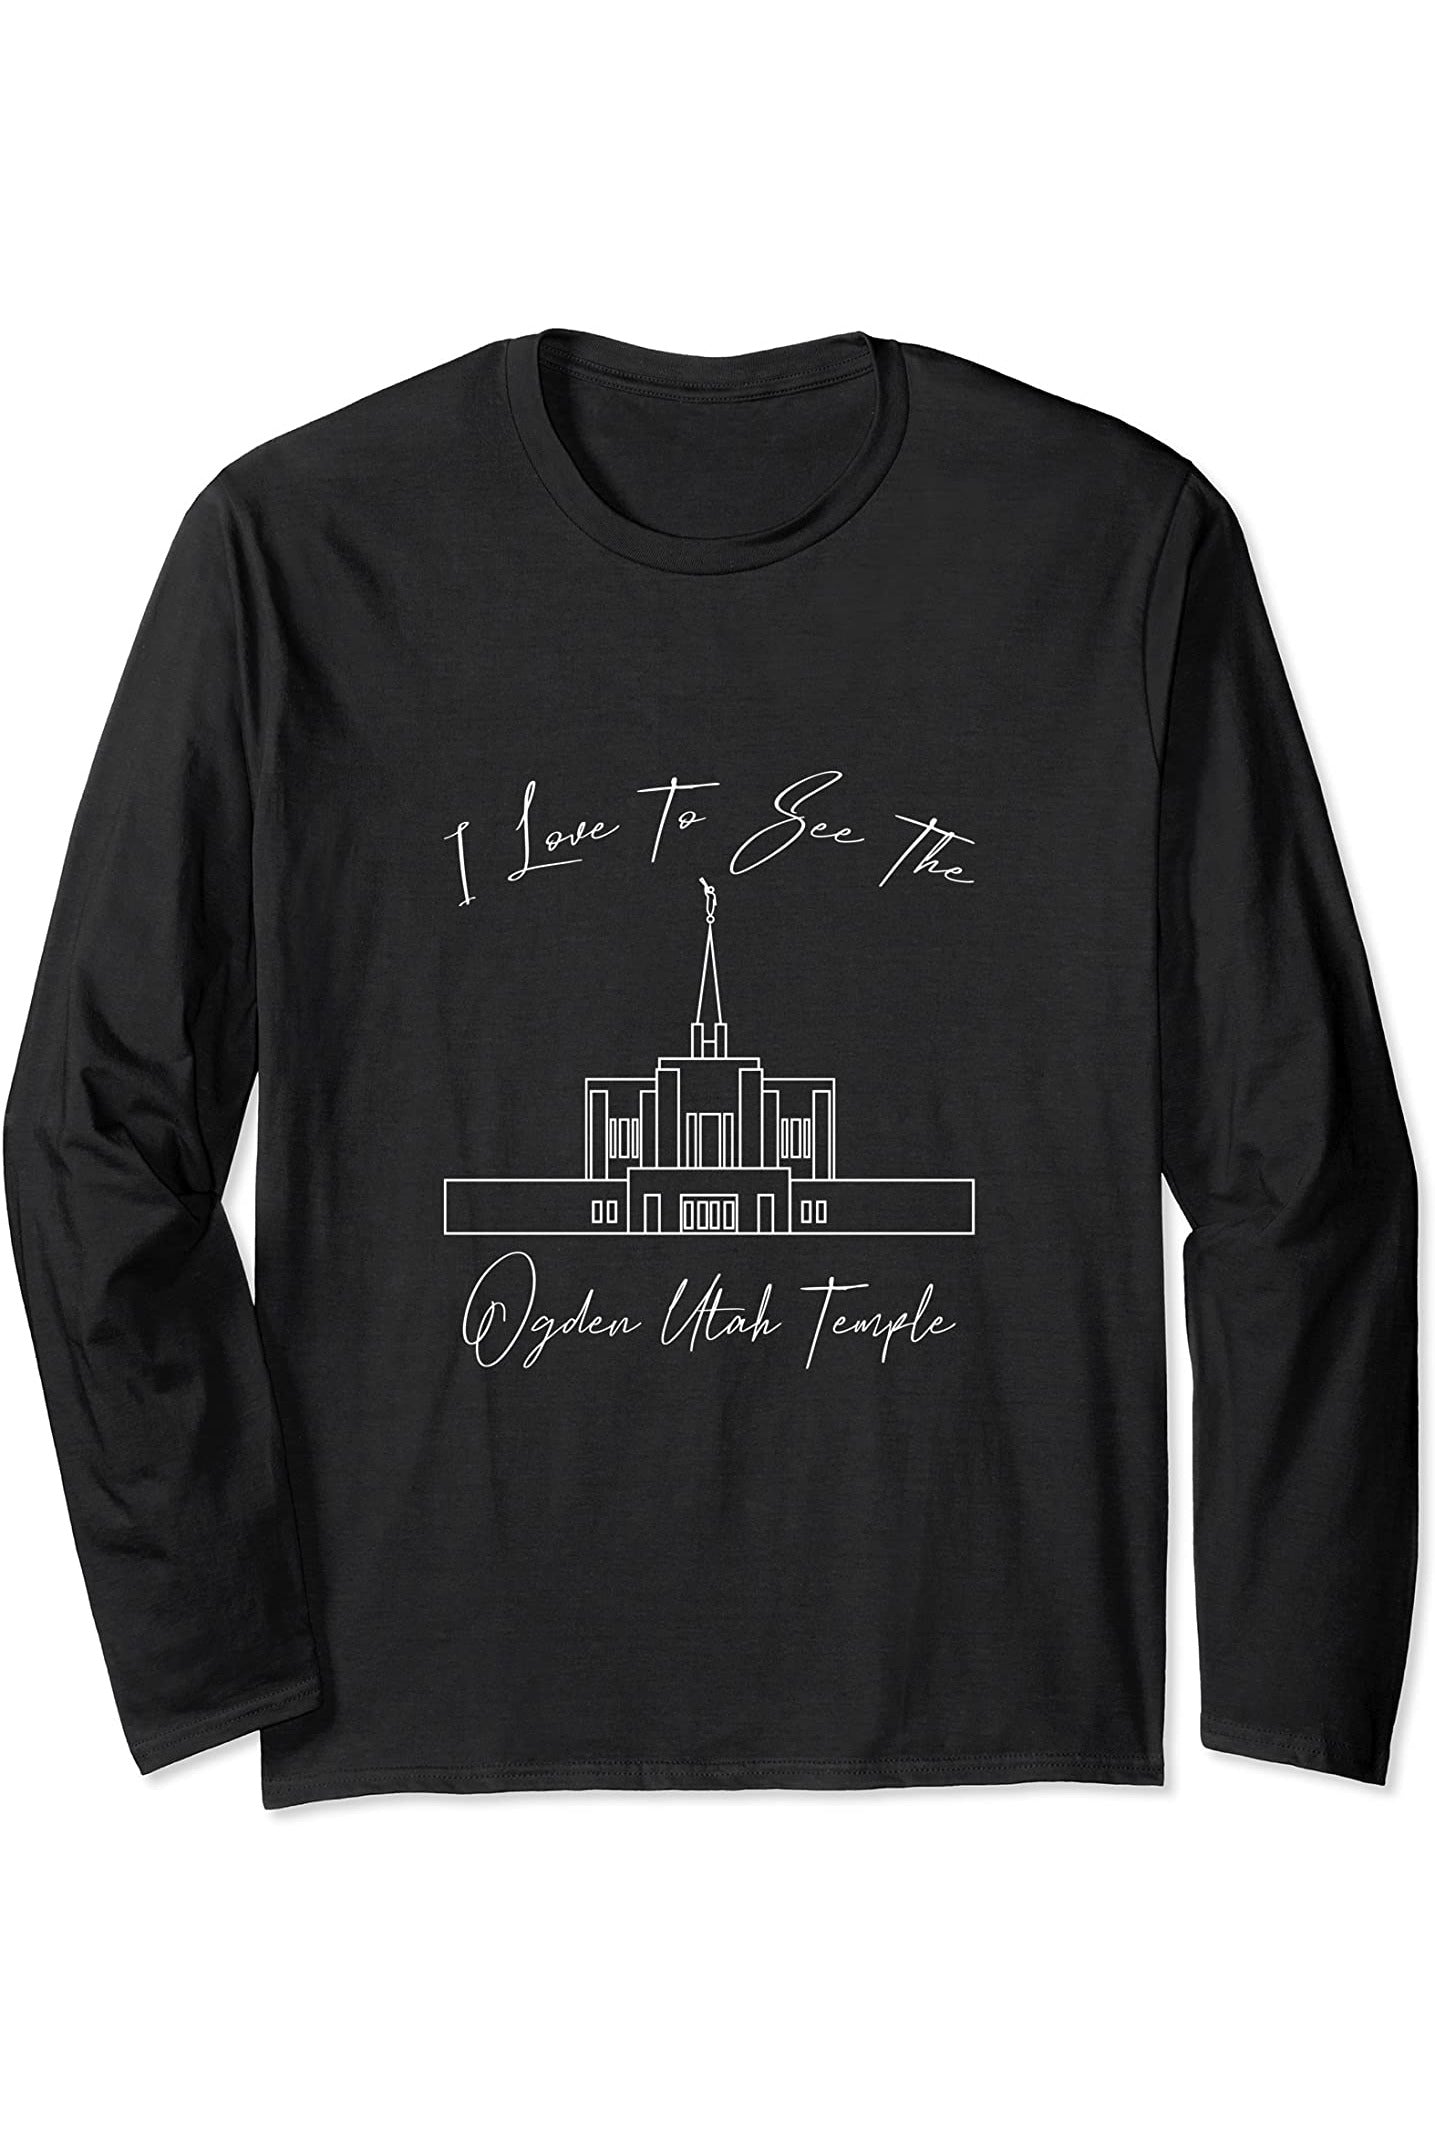 Ogden Utah Temple Long Sleeve T-Shirt - Calligraphy Style (English) US